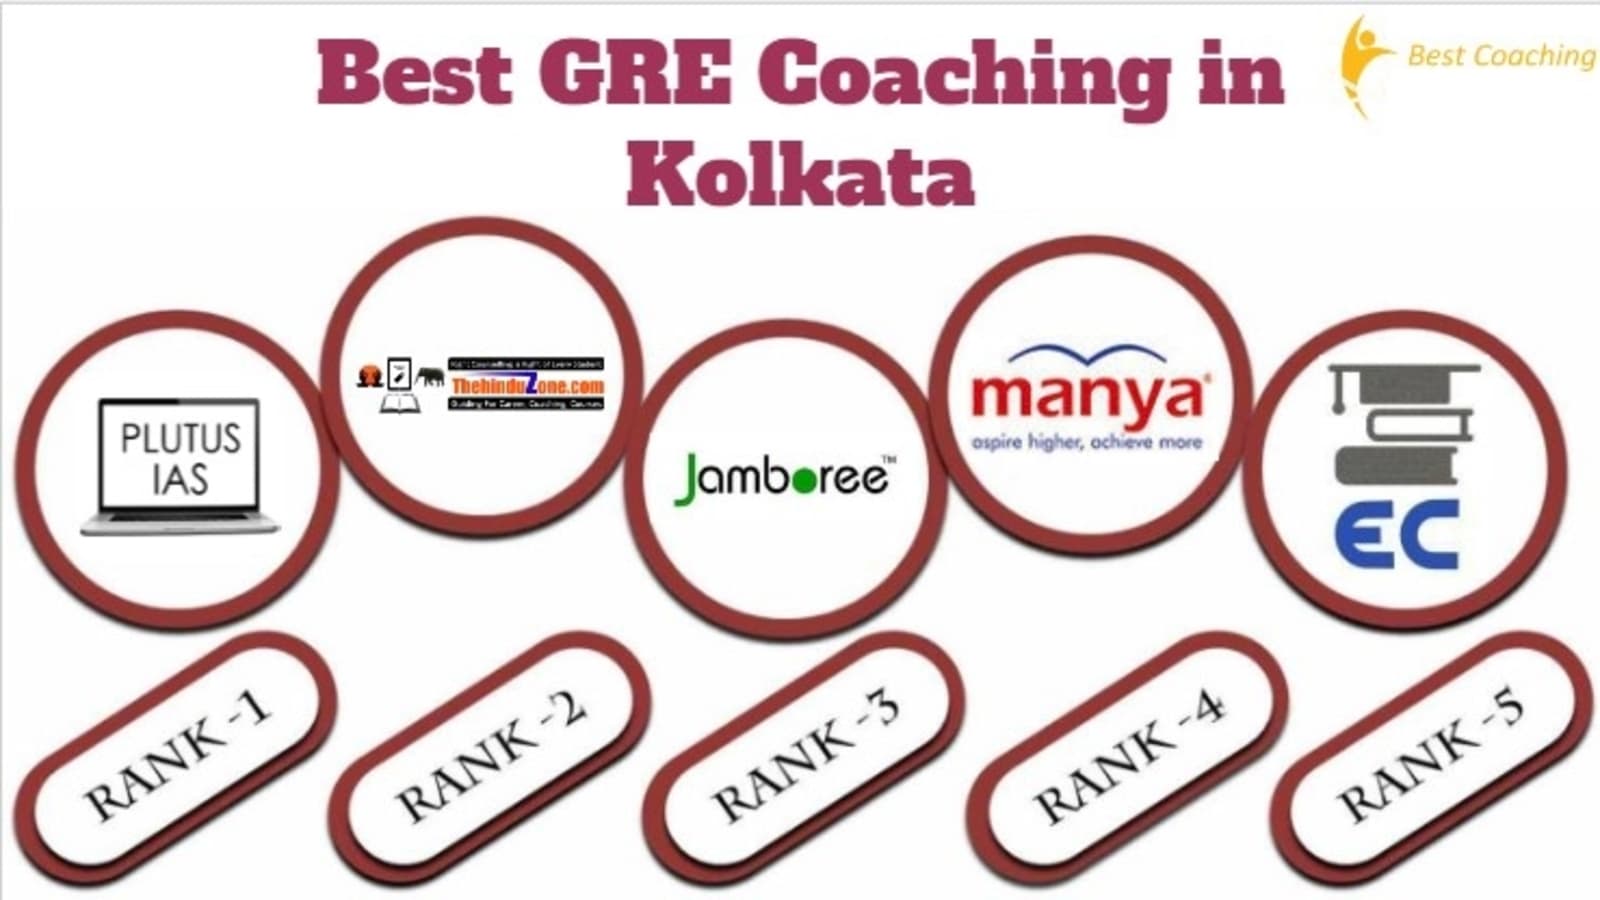 Best GRE Coaching in Kolkata